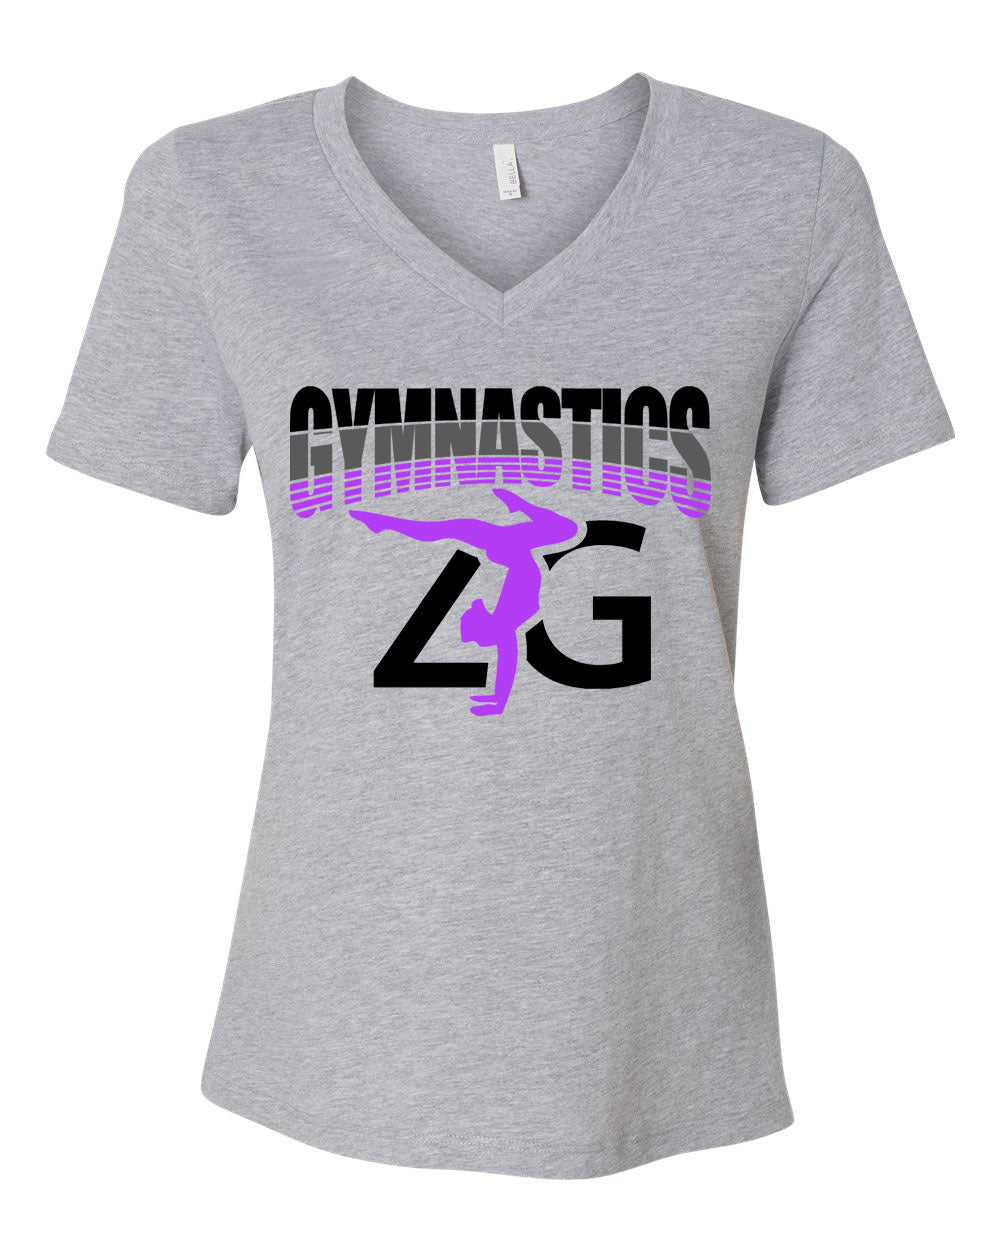 ZG Gymnastics V-neck T-shirt